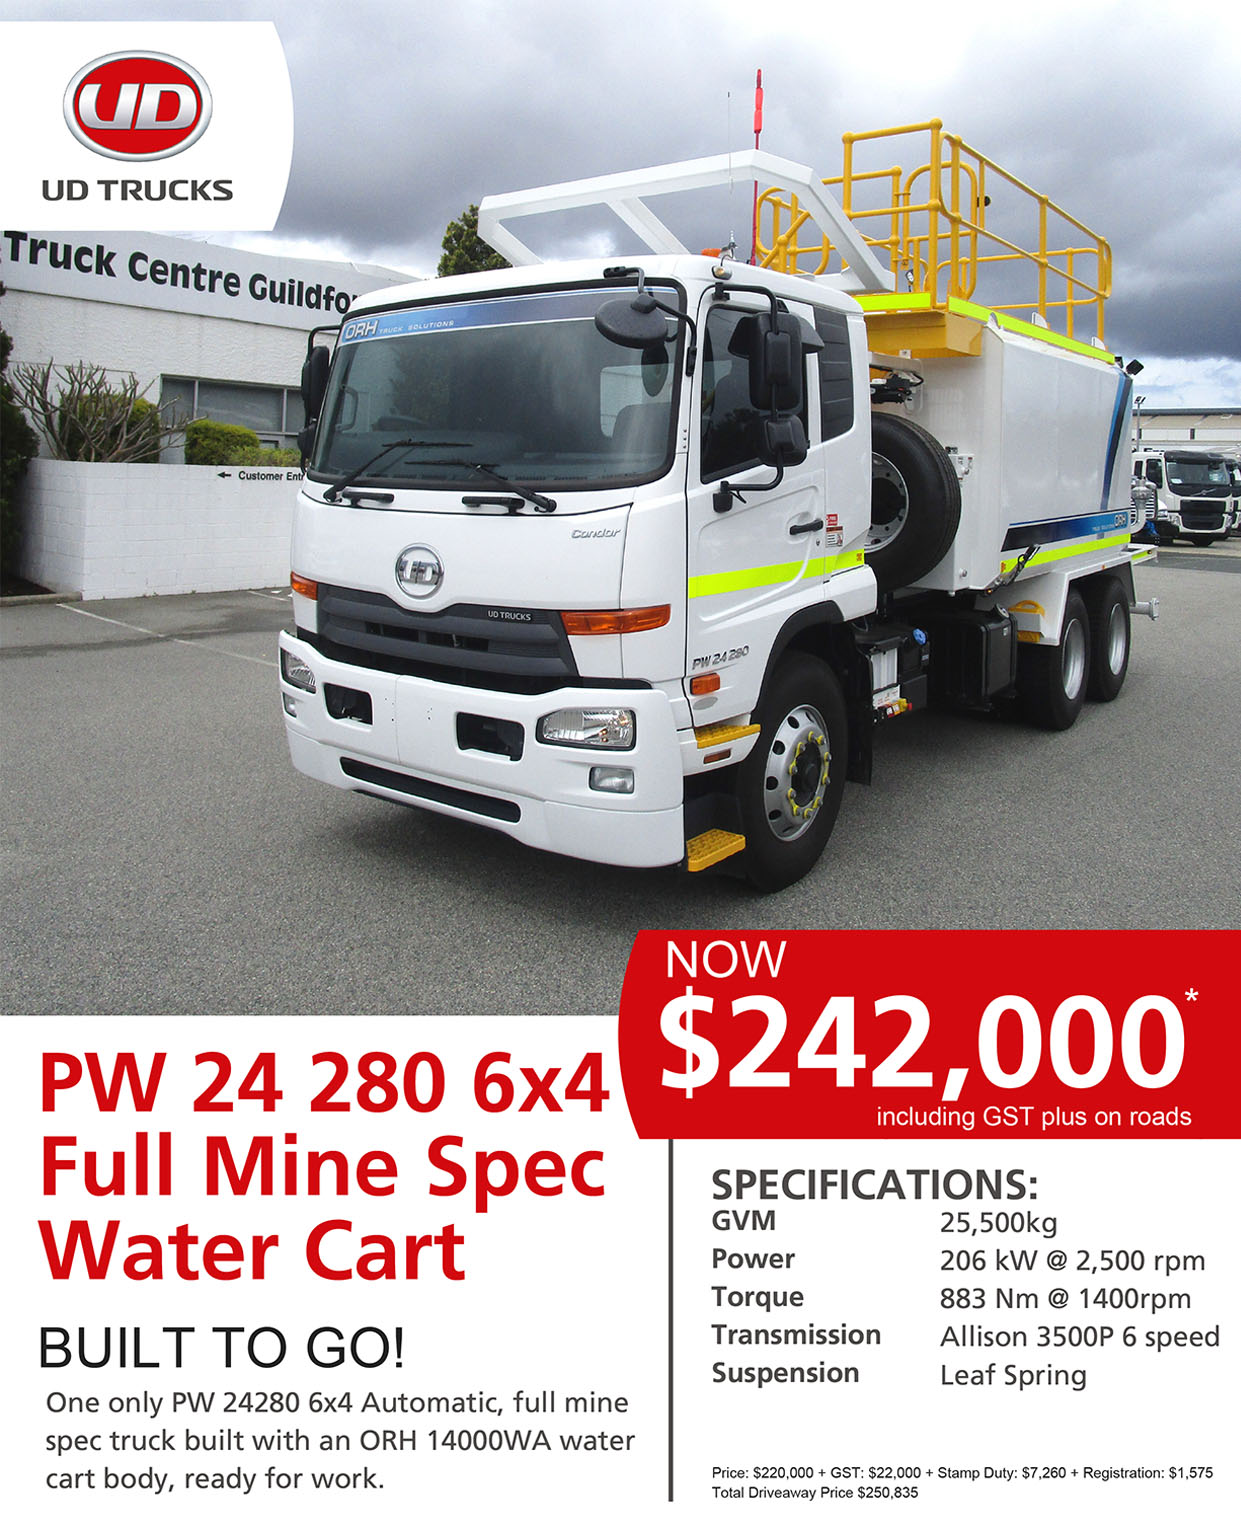 UD PW24280 Full Mine Spec Water Cart